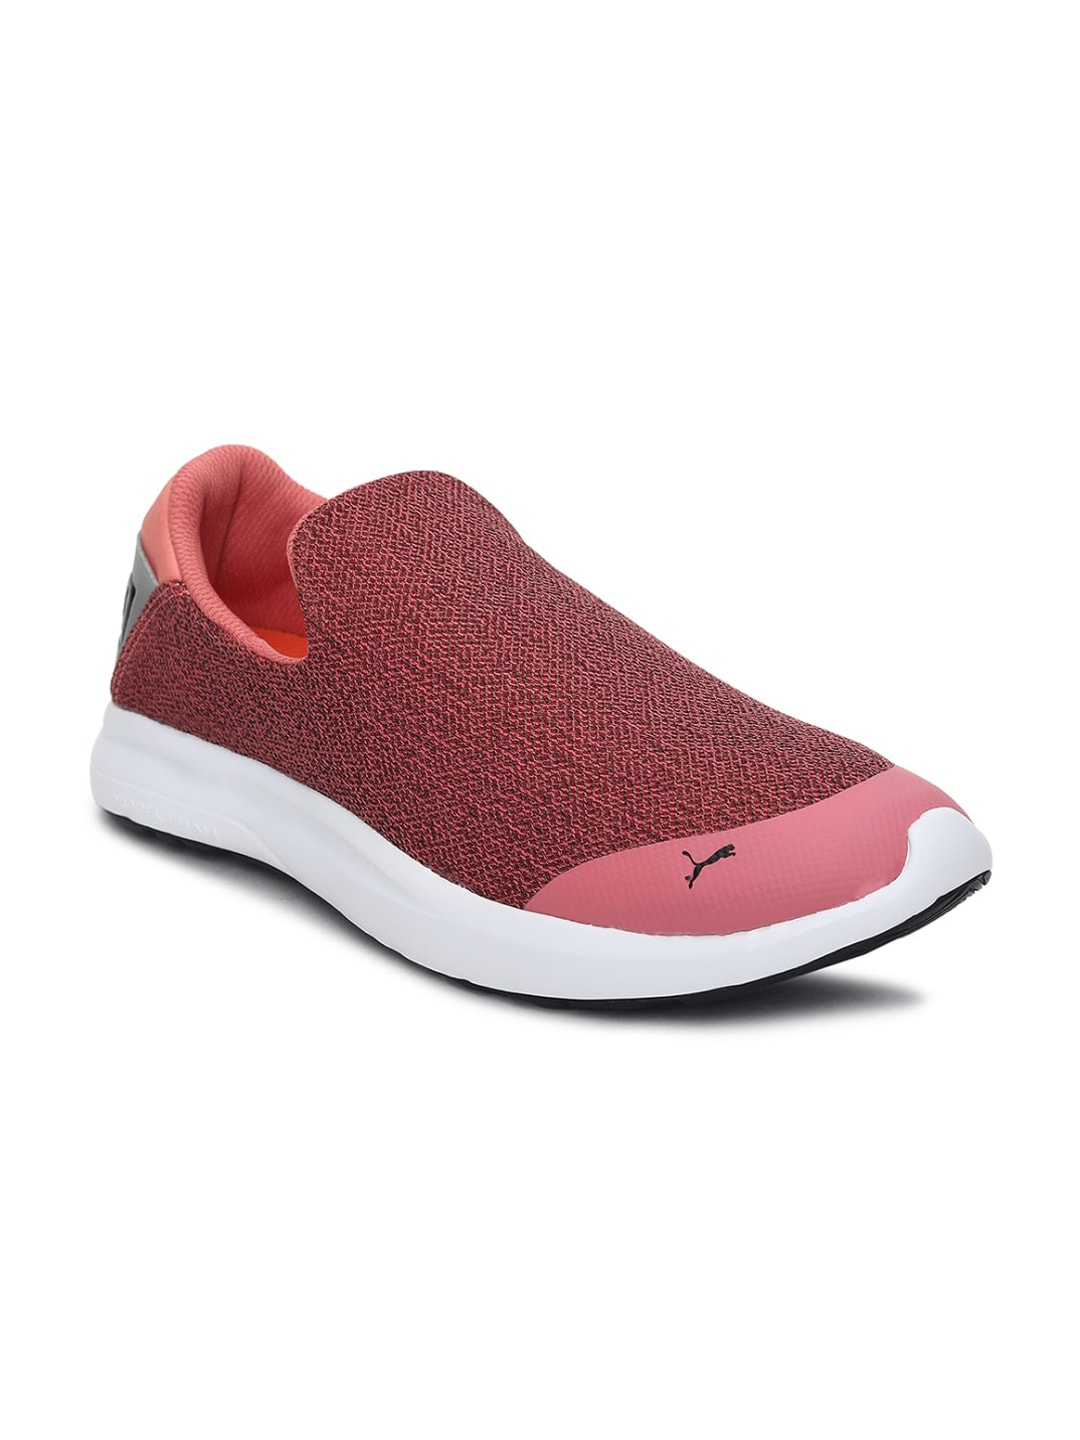 Puma Women Pink Comfort Sneakers Price in India